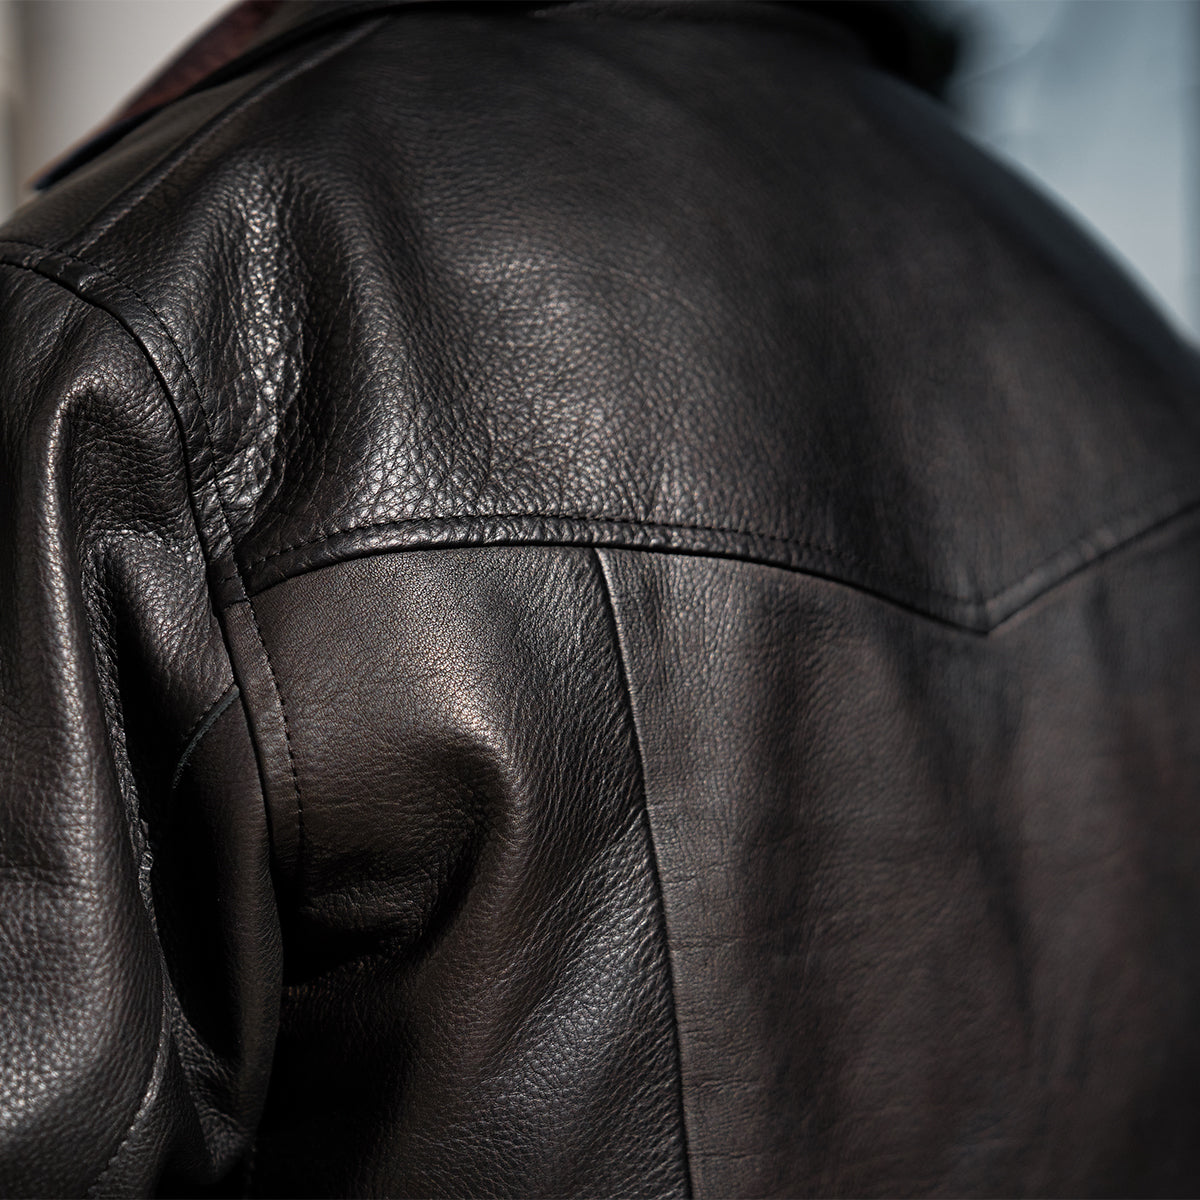 Vintage Americana Bomber — Coronado Leather